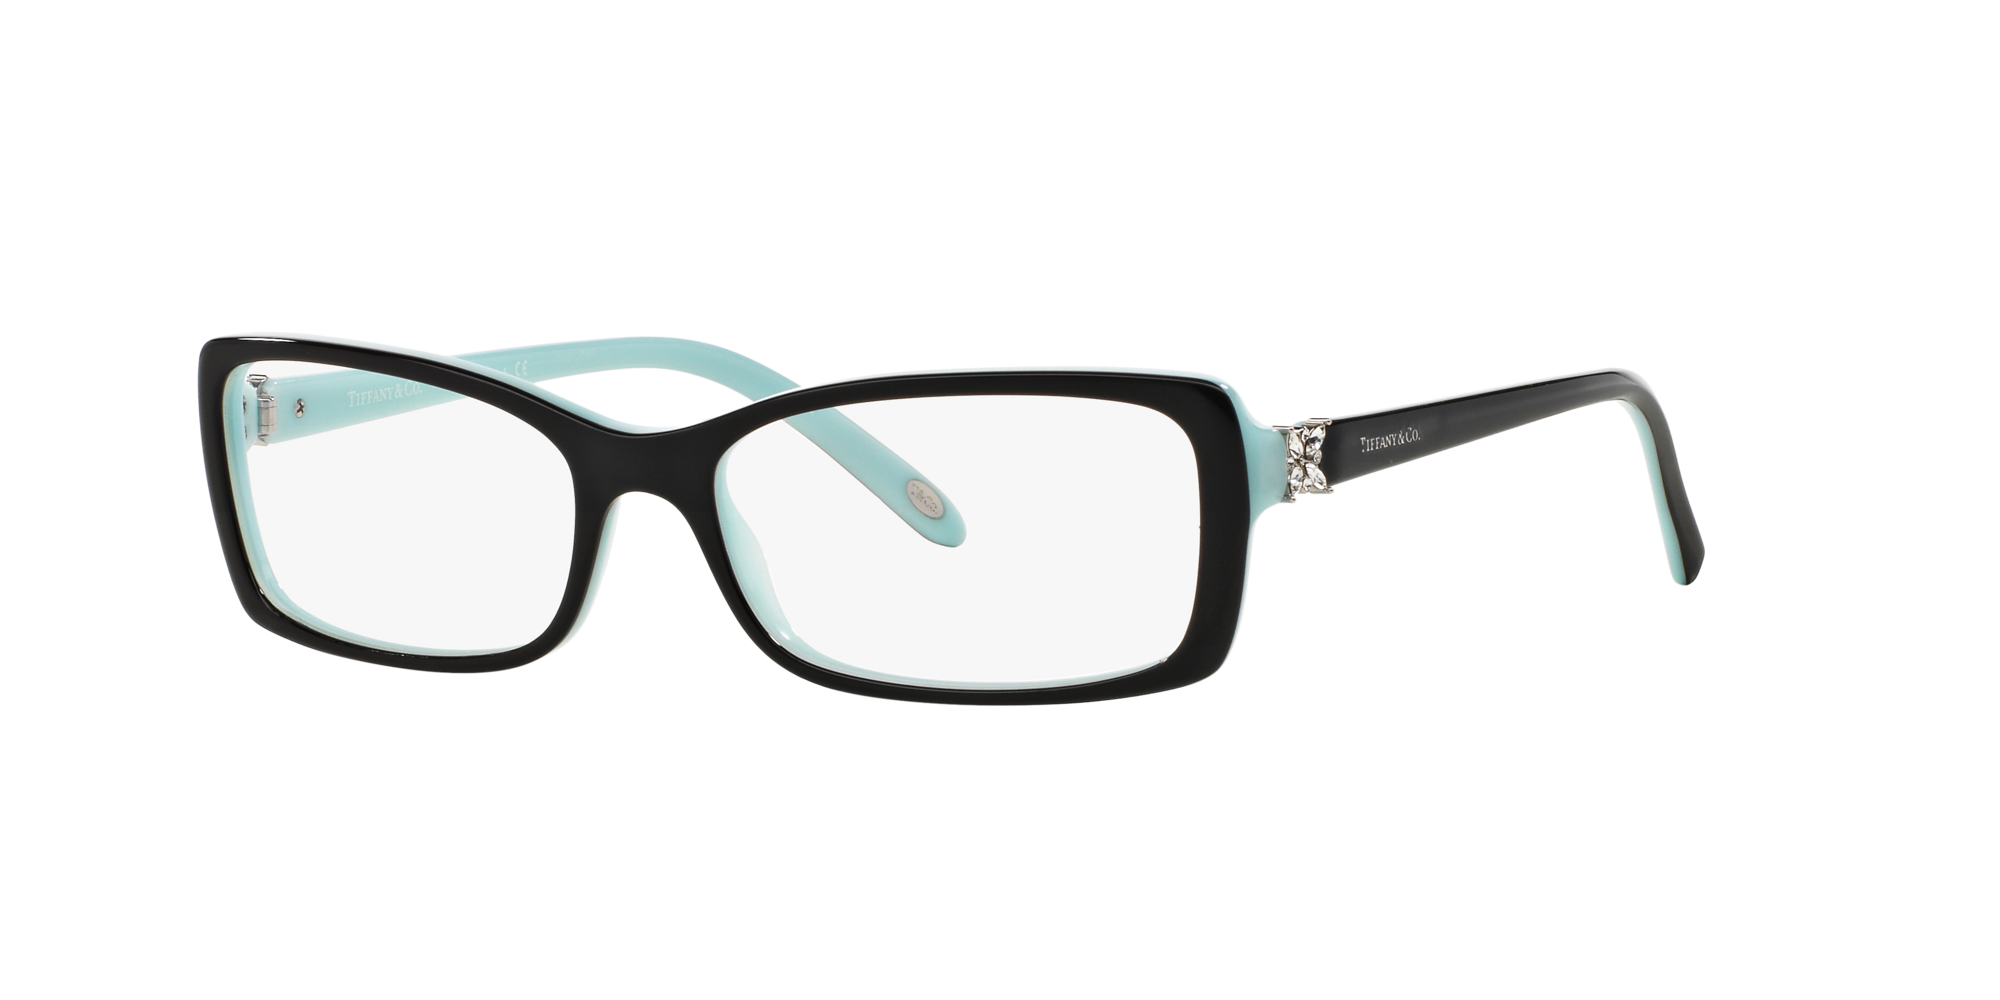 tiffany frames glasses